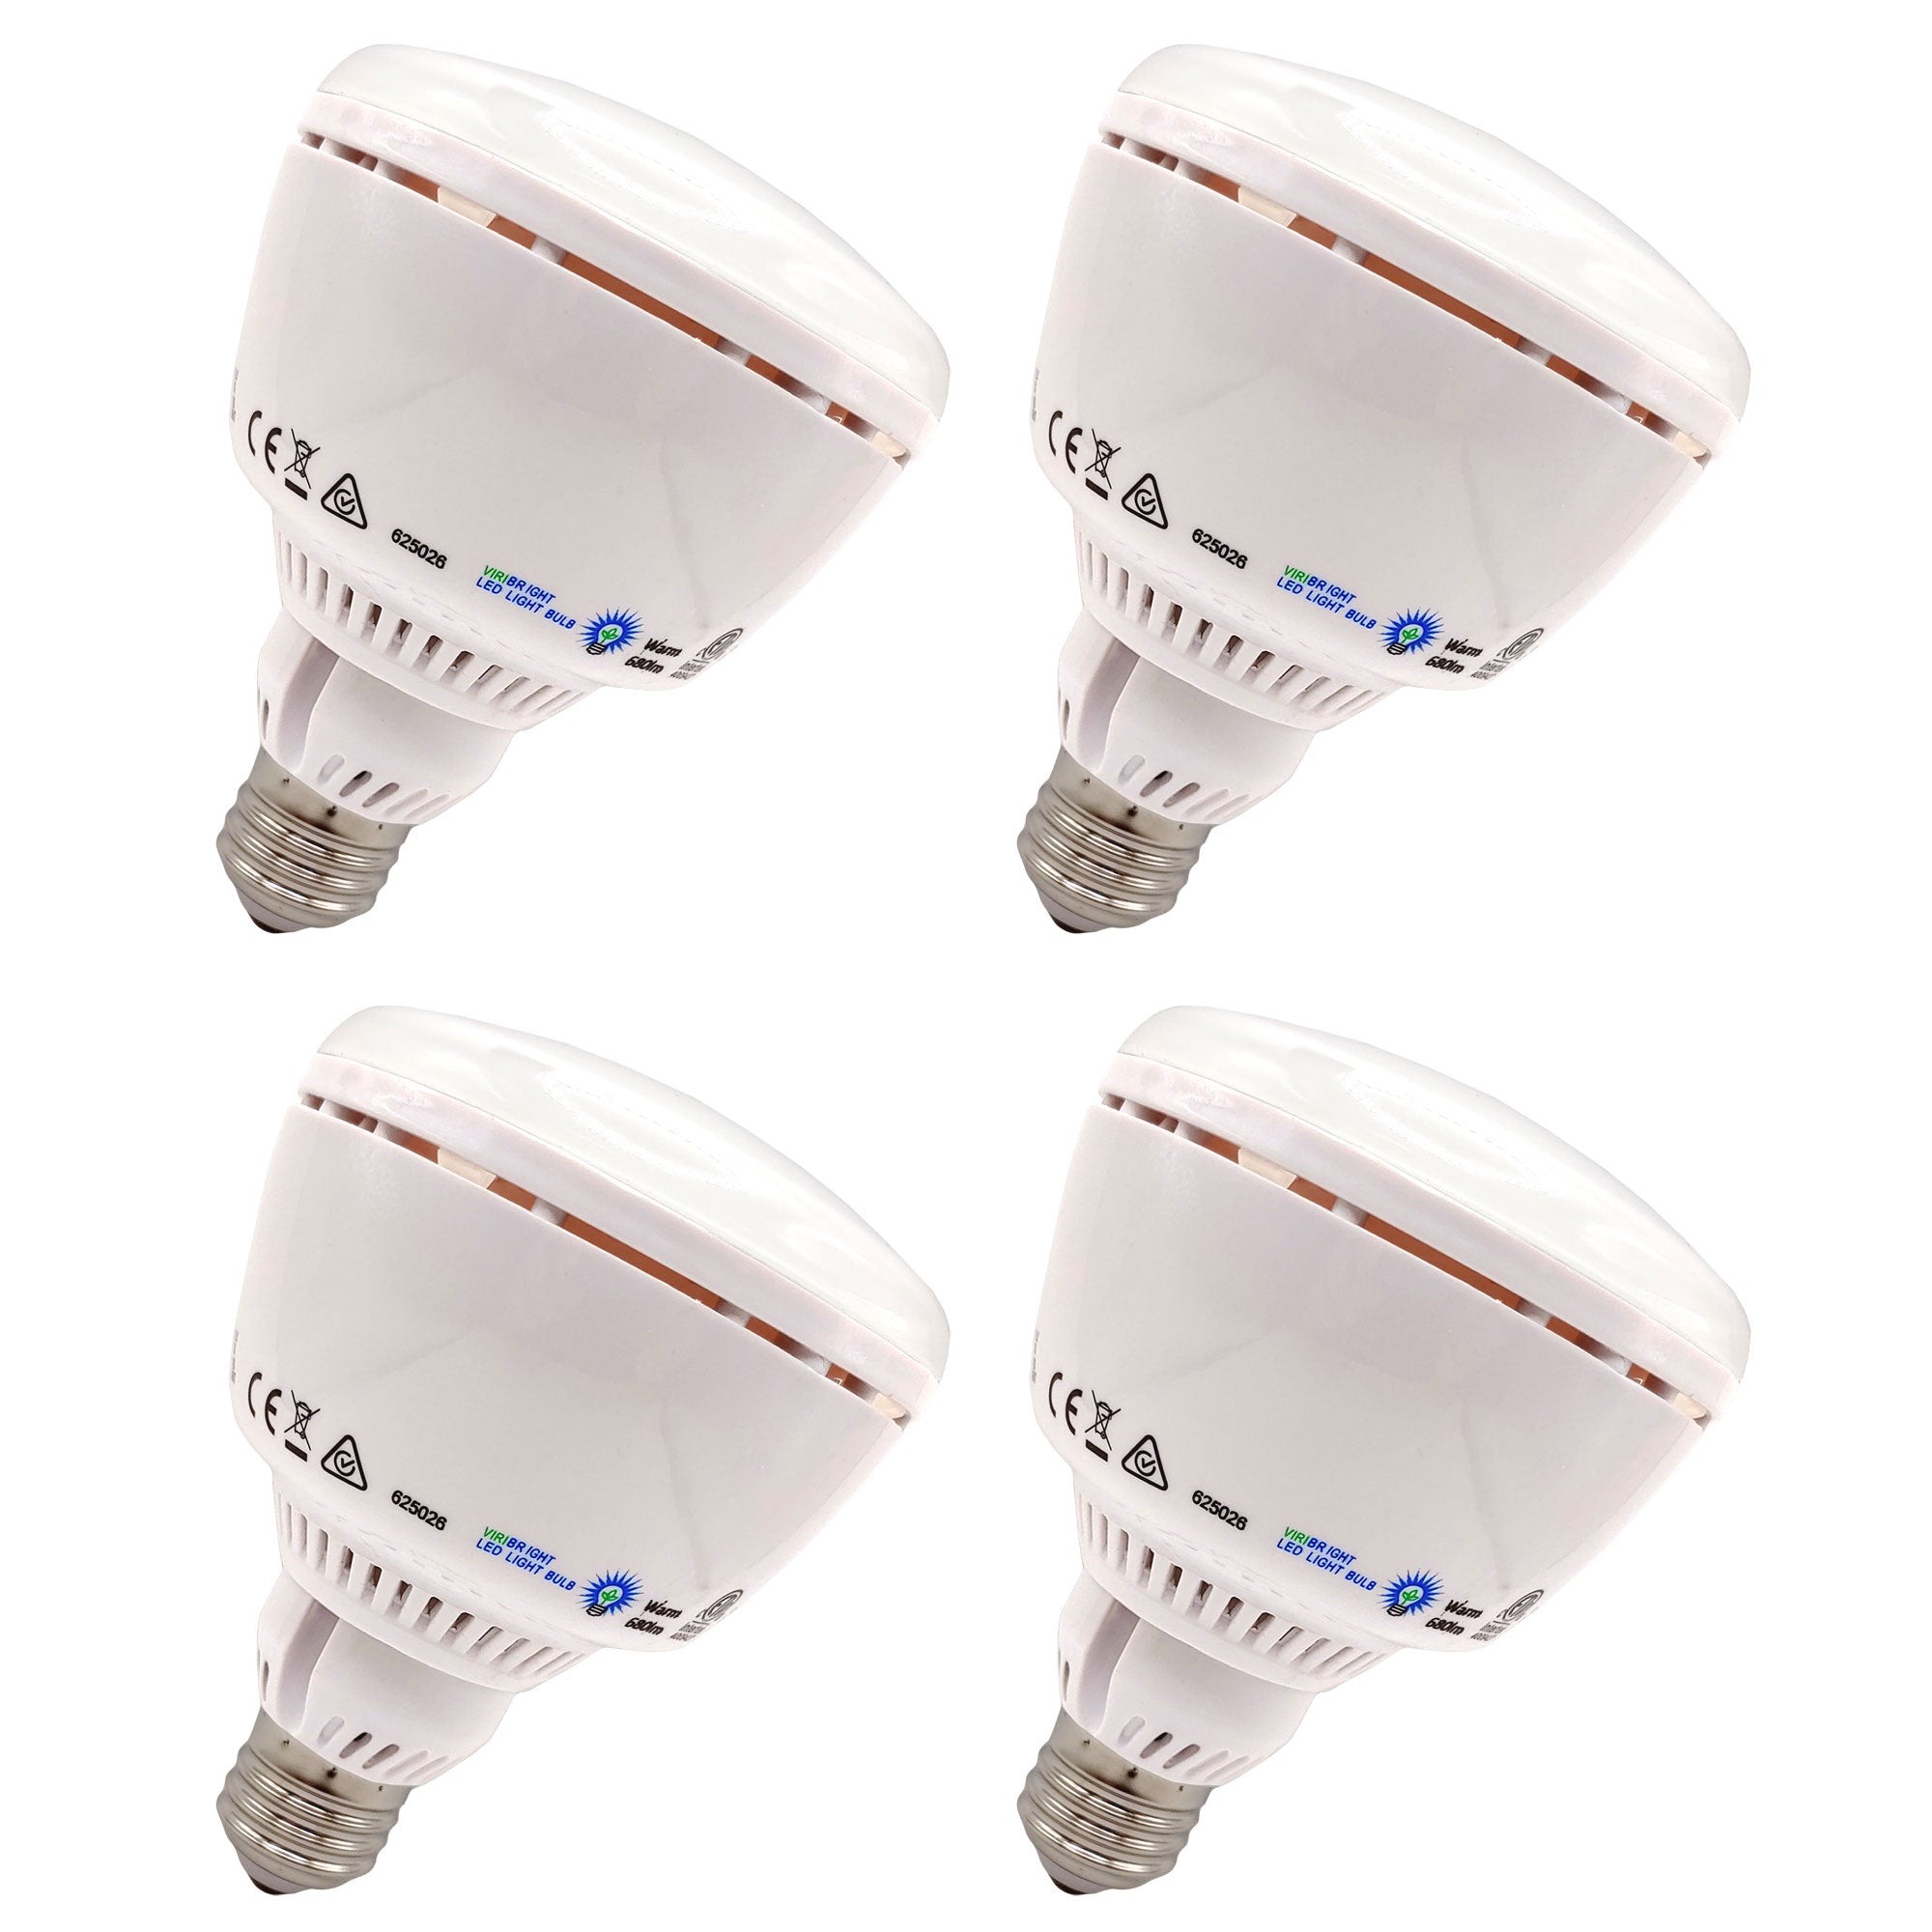 65-Watt Equivalent BR30 E26 Dimmable Indoor LED Flood Light Bulb